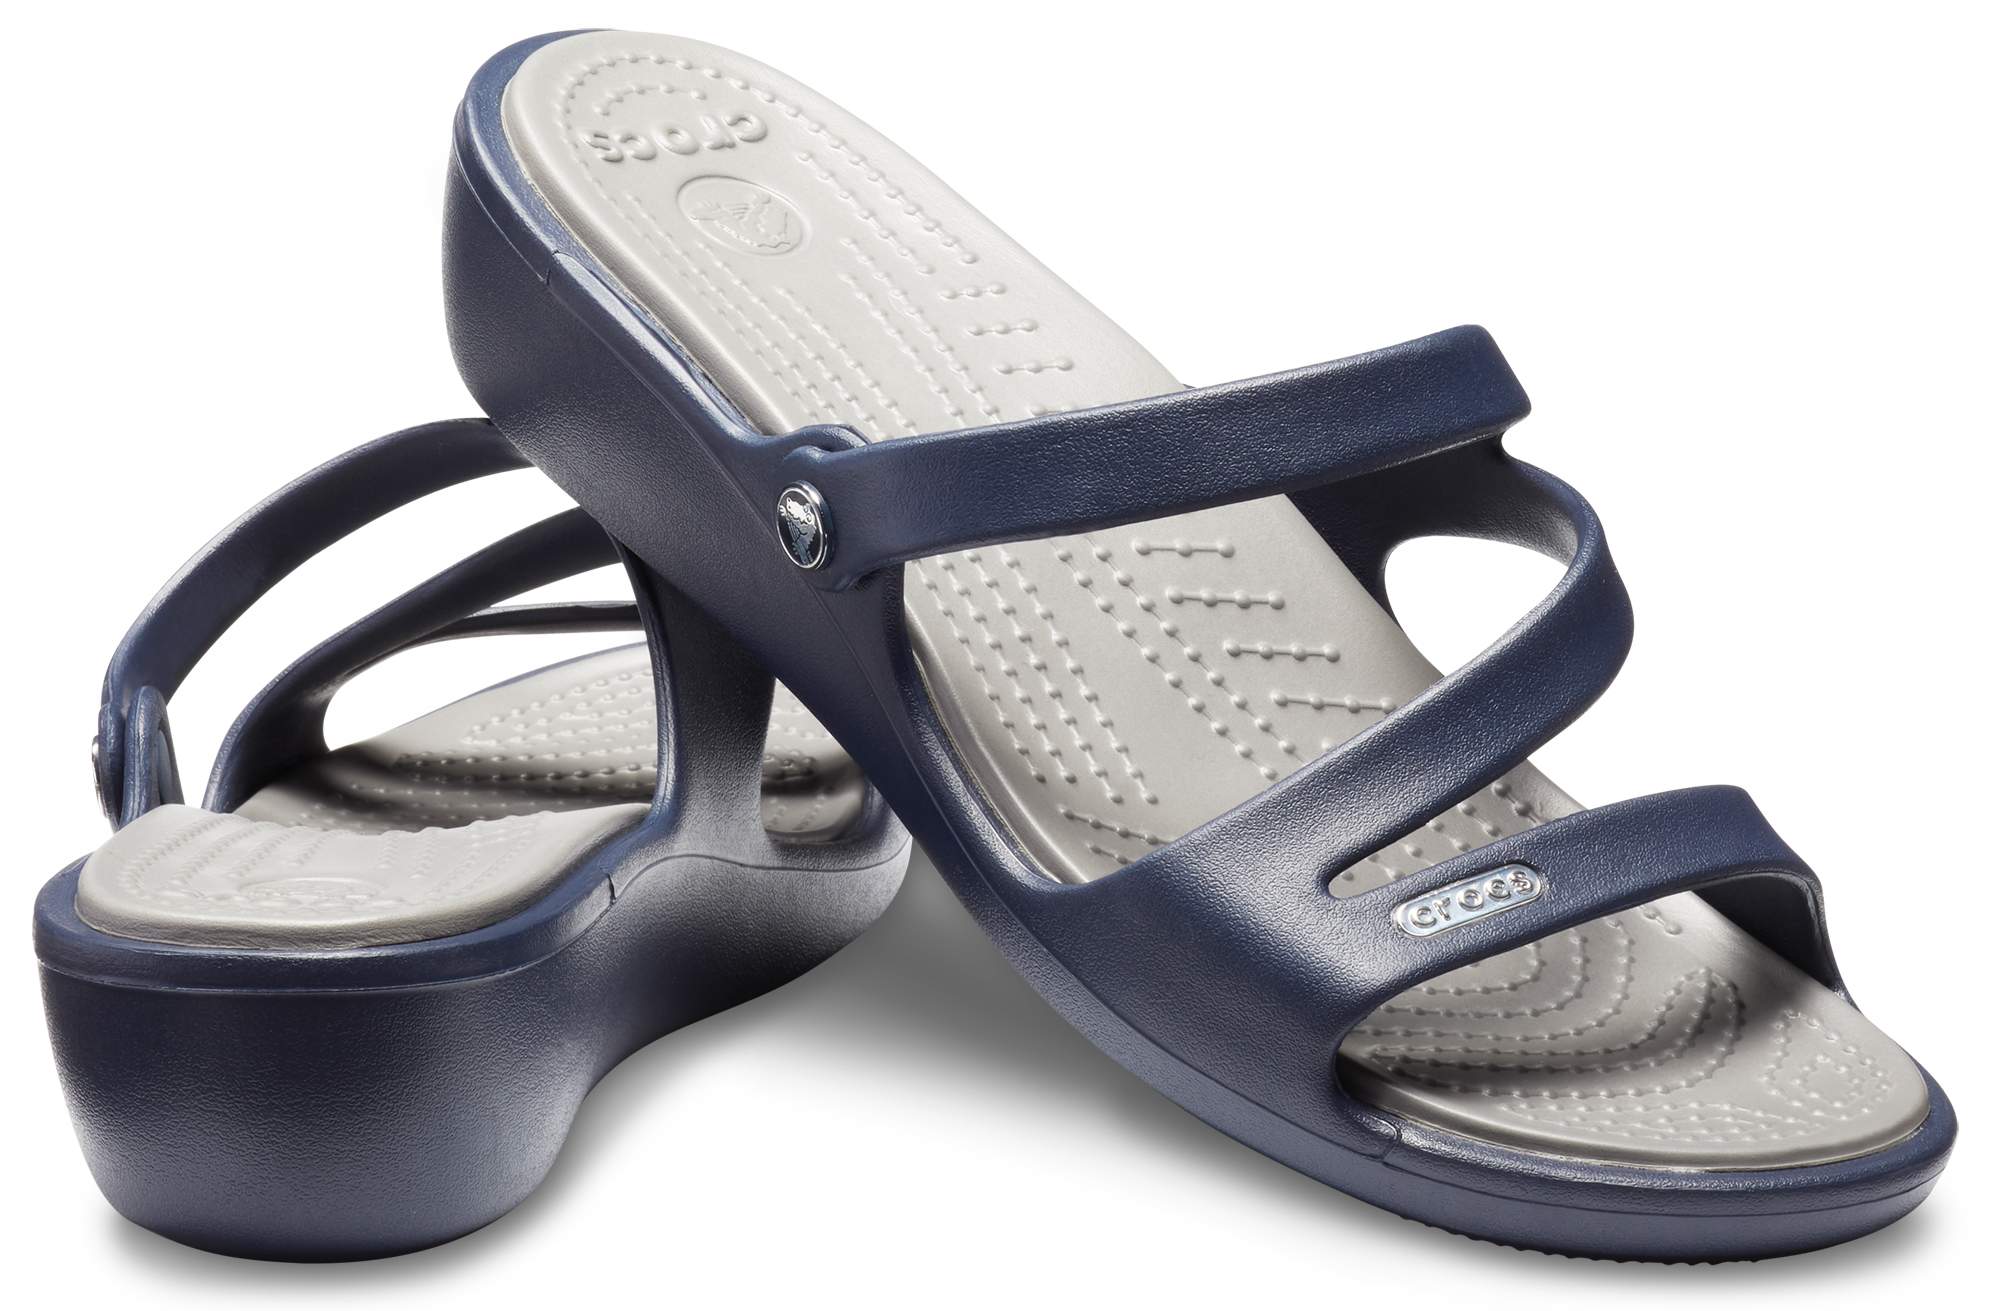 women's patricia sandal crocs